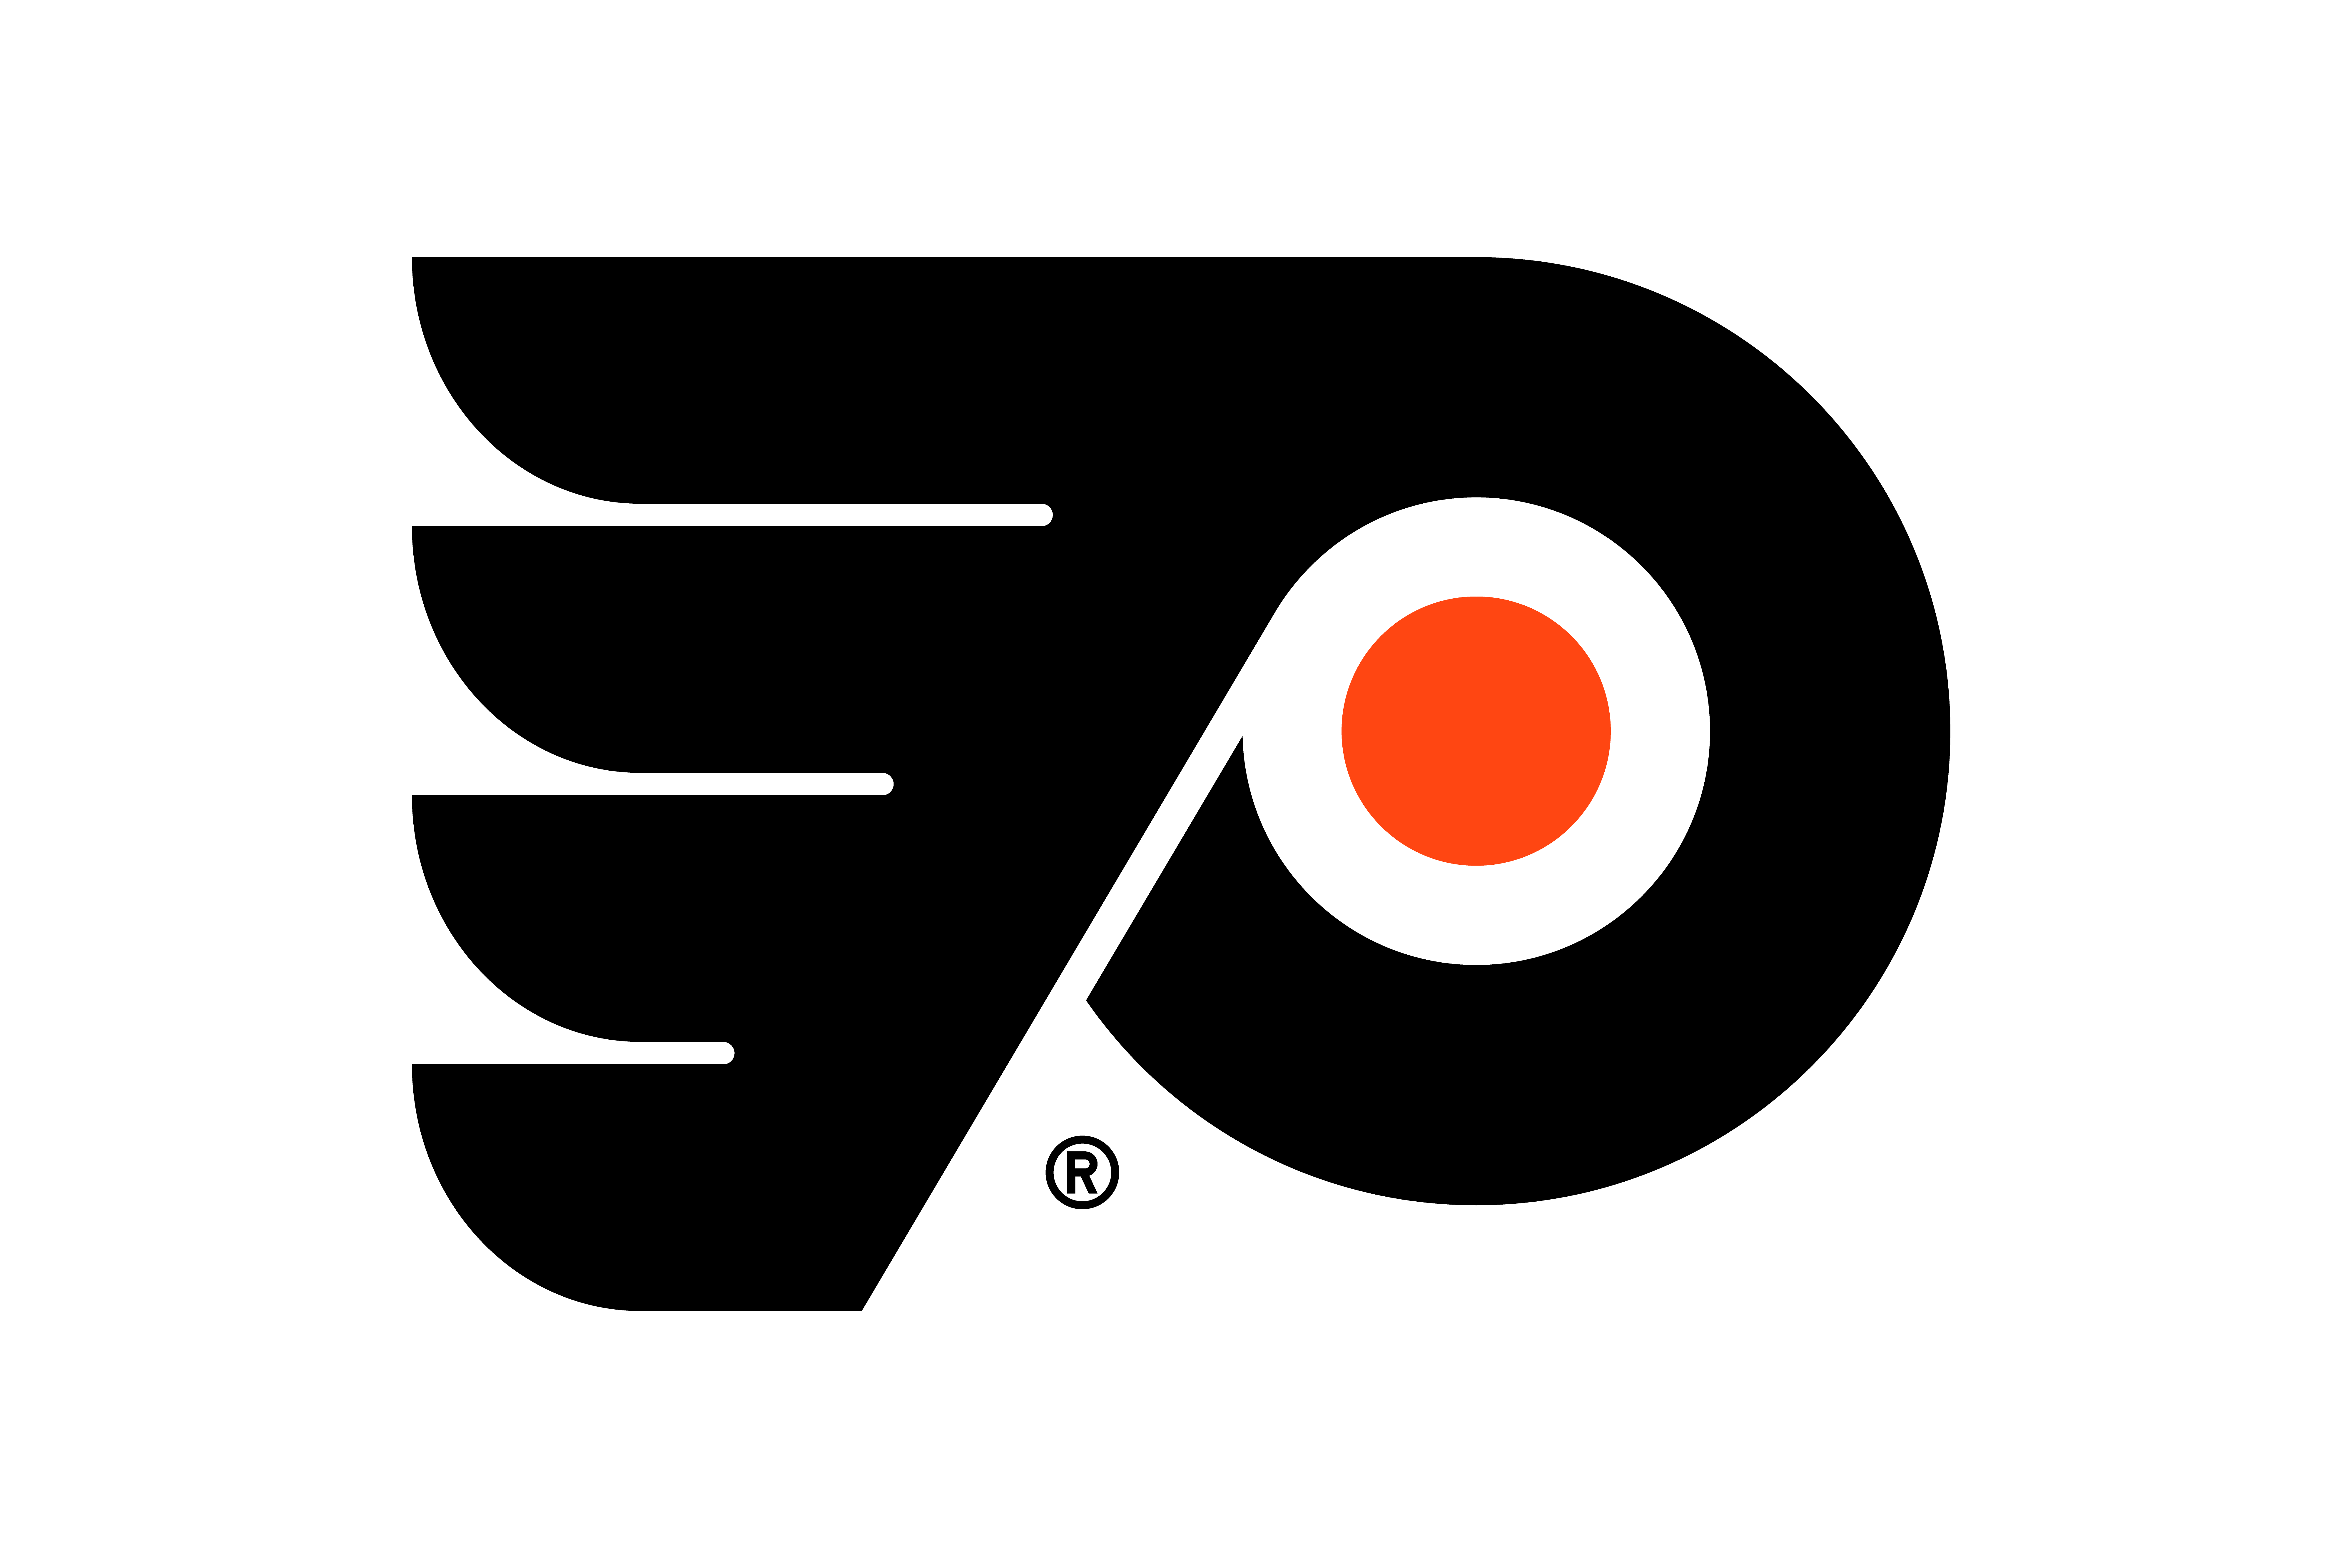 75+] Philadelphia Flyers Wallpaper - WallpaperSafari